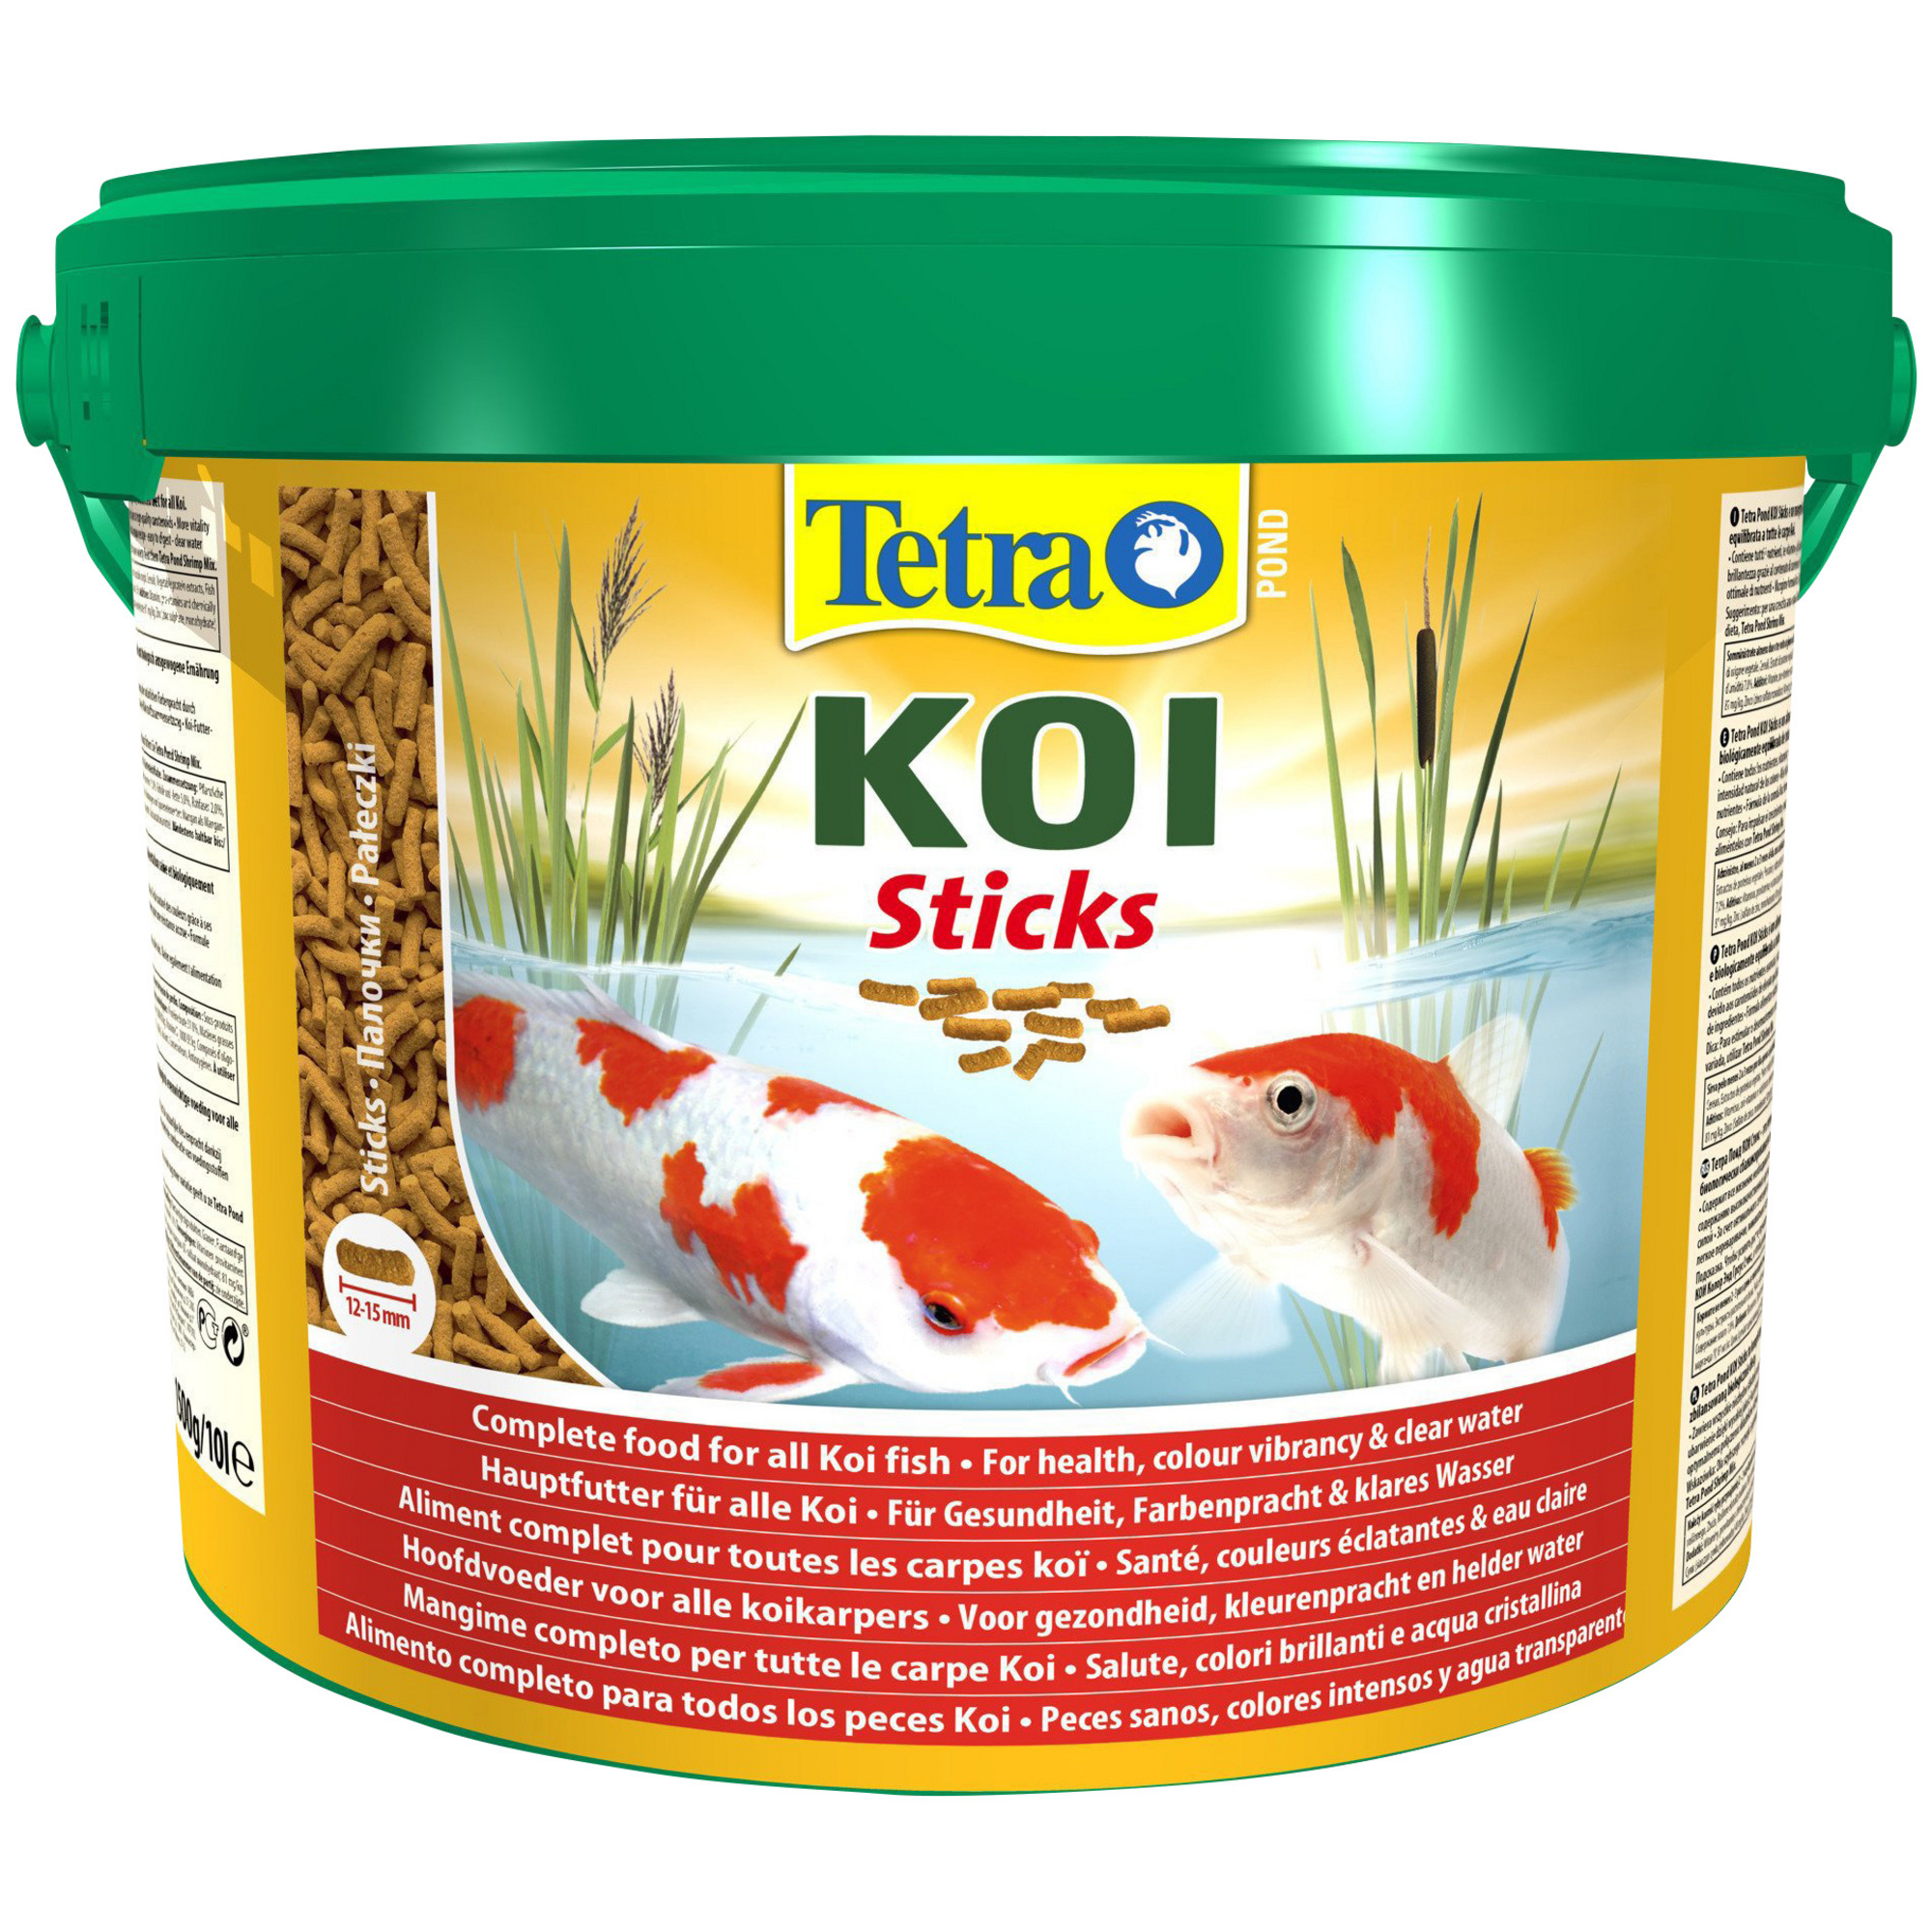 Рыбы тетра купить. Корм для рыб Tetra Pond Sticks. Tetra Pond Koi Sticks палочки. Корм тетра Понд Стикс. Tetra Pond Sticks 50 л основной корм для кои палочки.